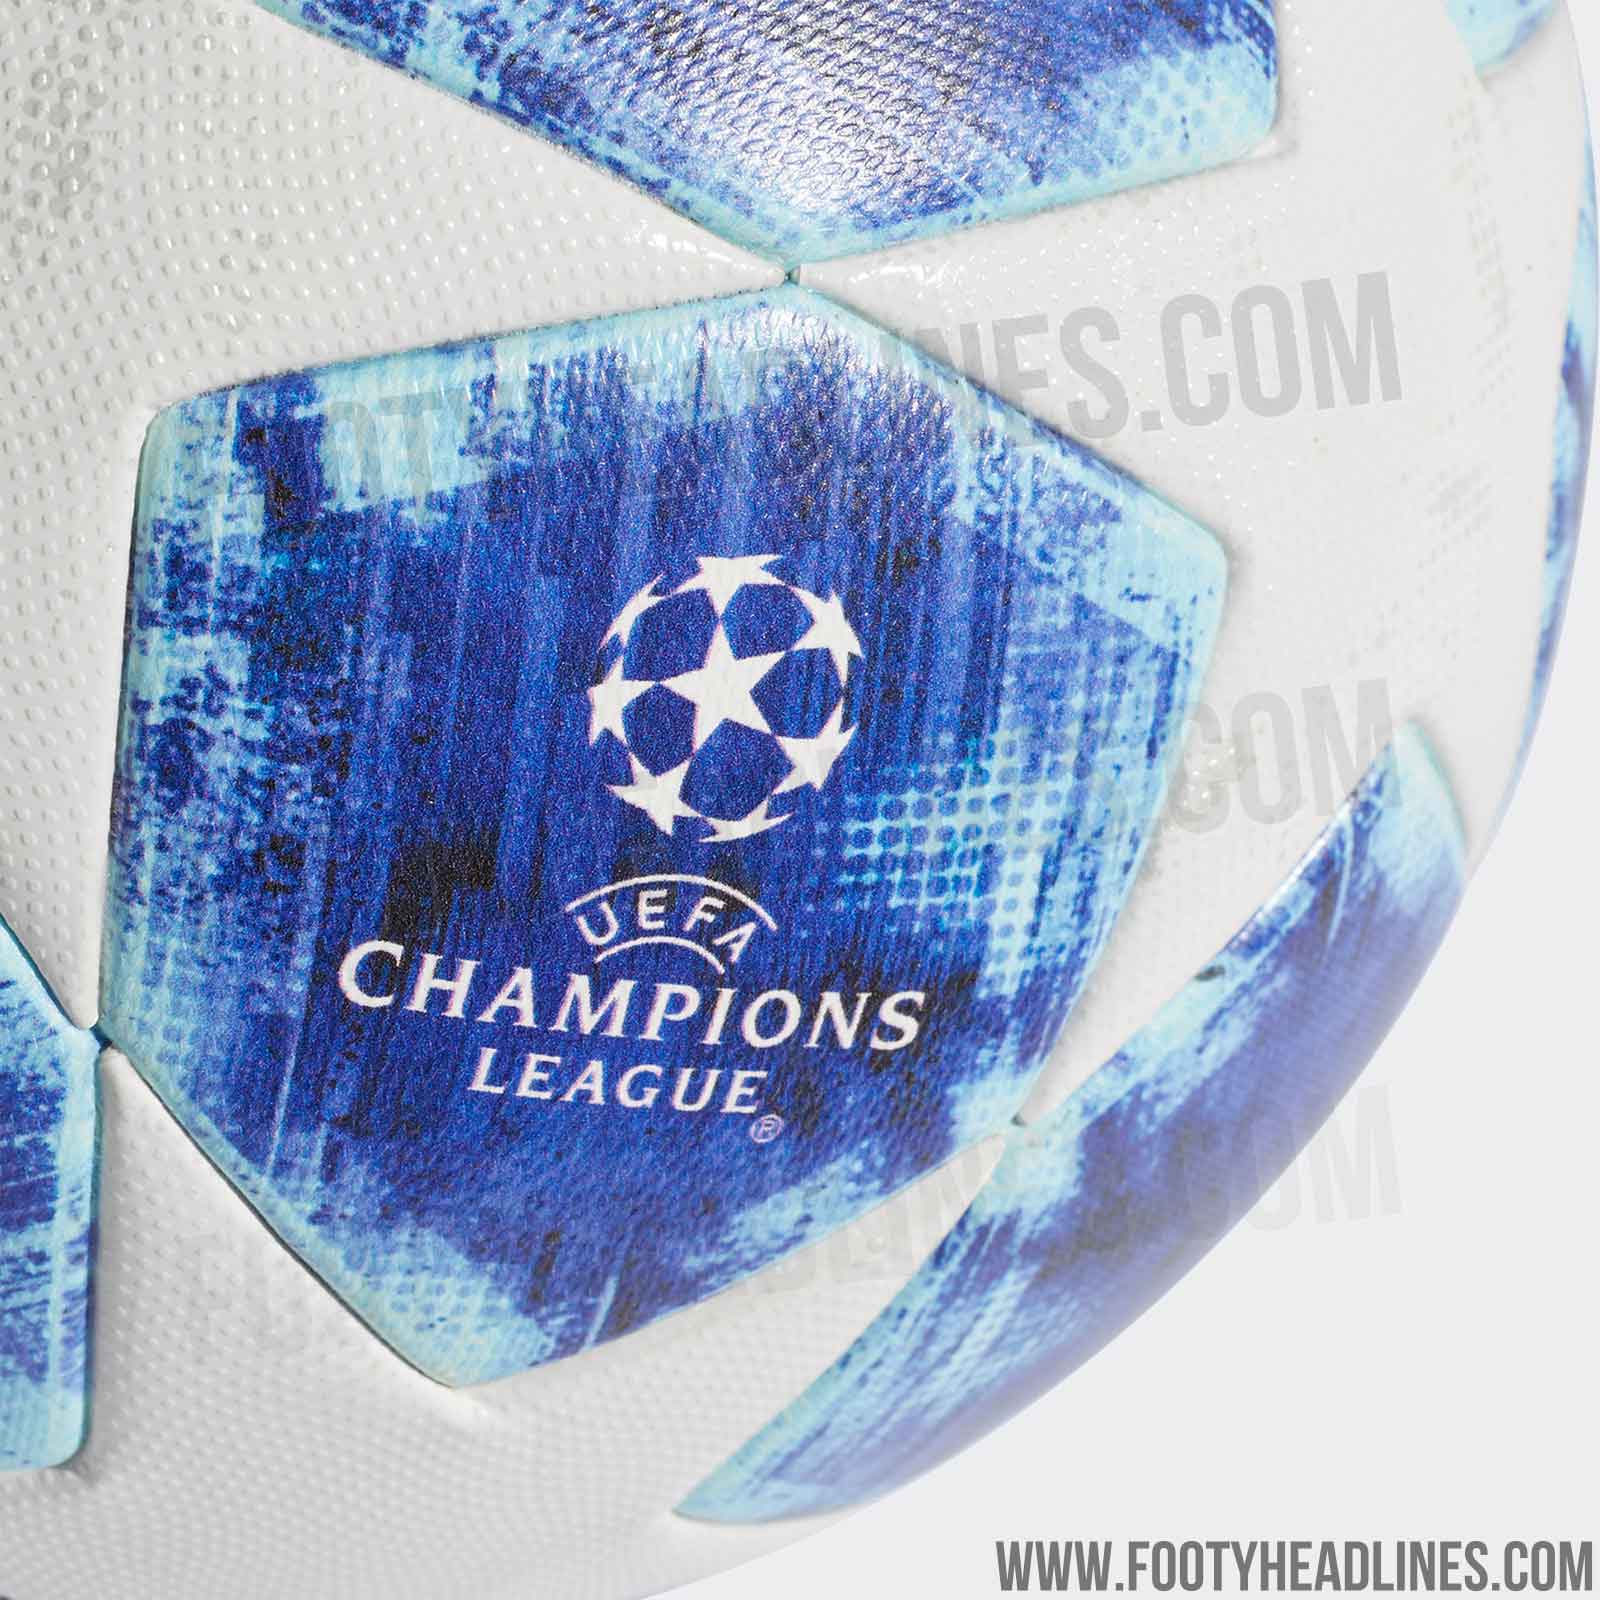 ADIDAS UEFA CHAMPIONS LEAGUE BLUE/white STAR OMB 2018-19 no box